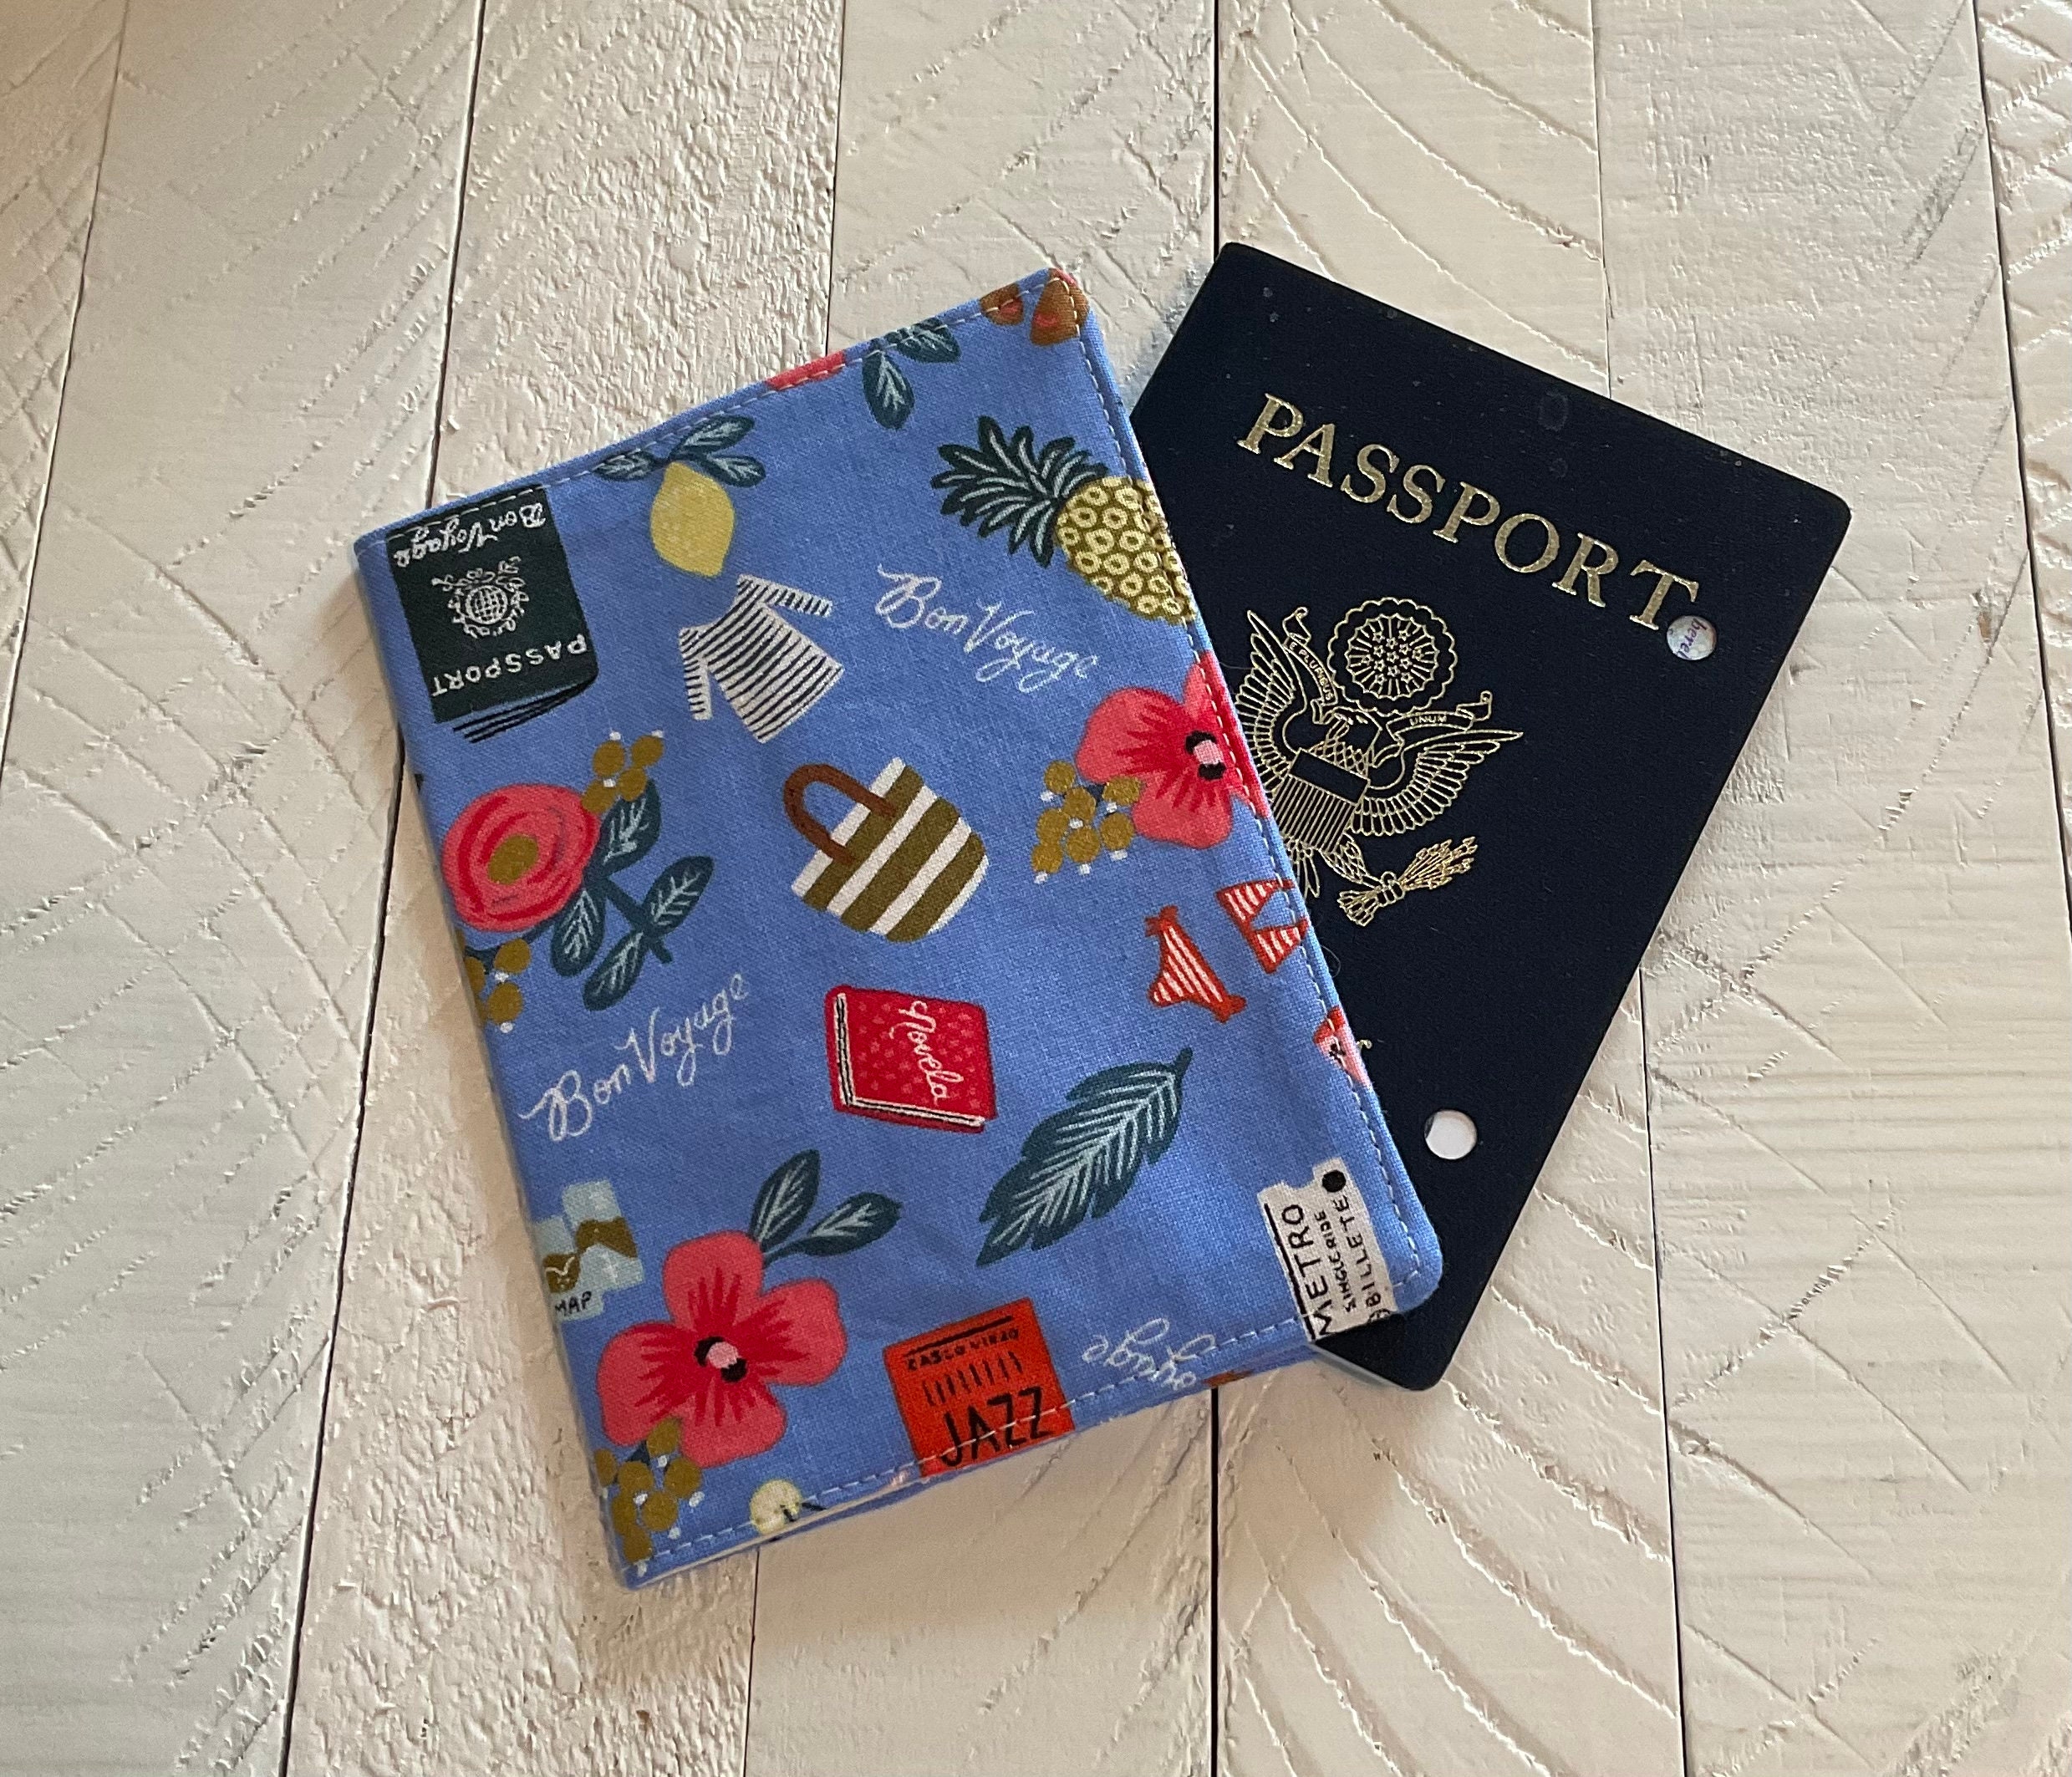 Bon Voyage Passport Cover